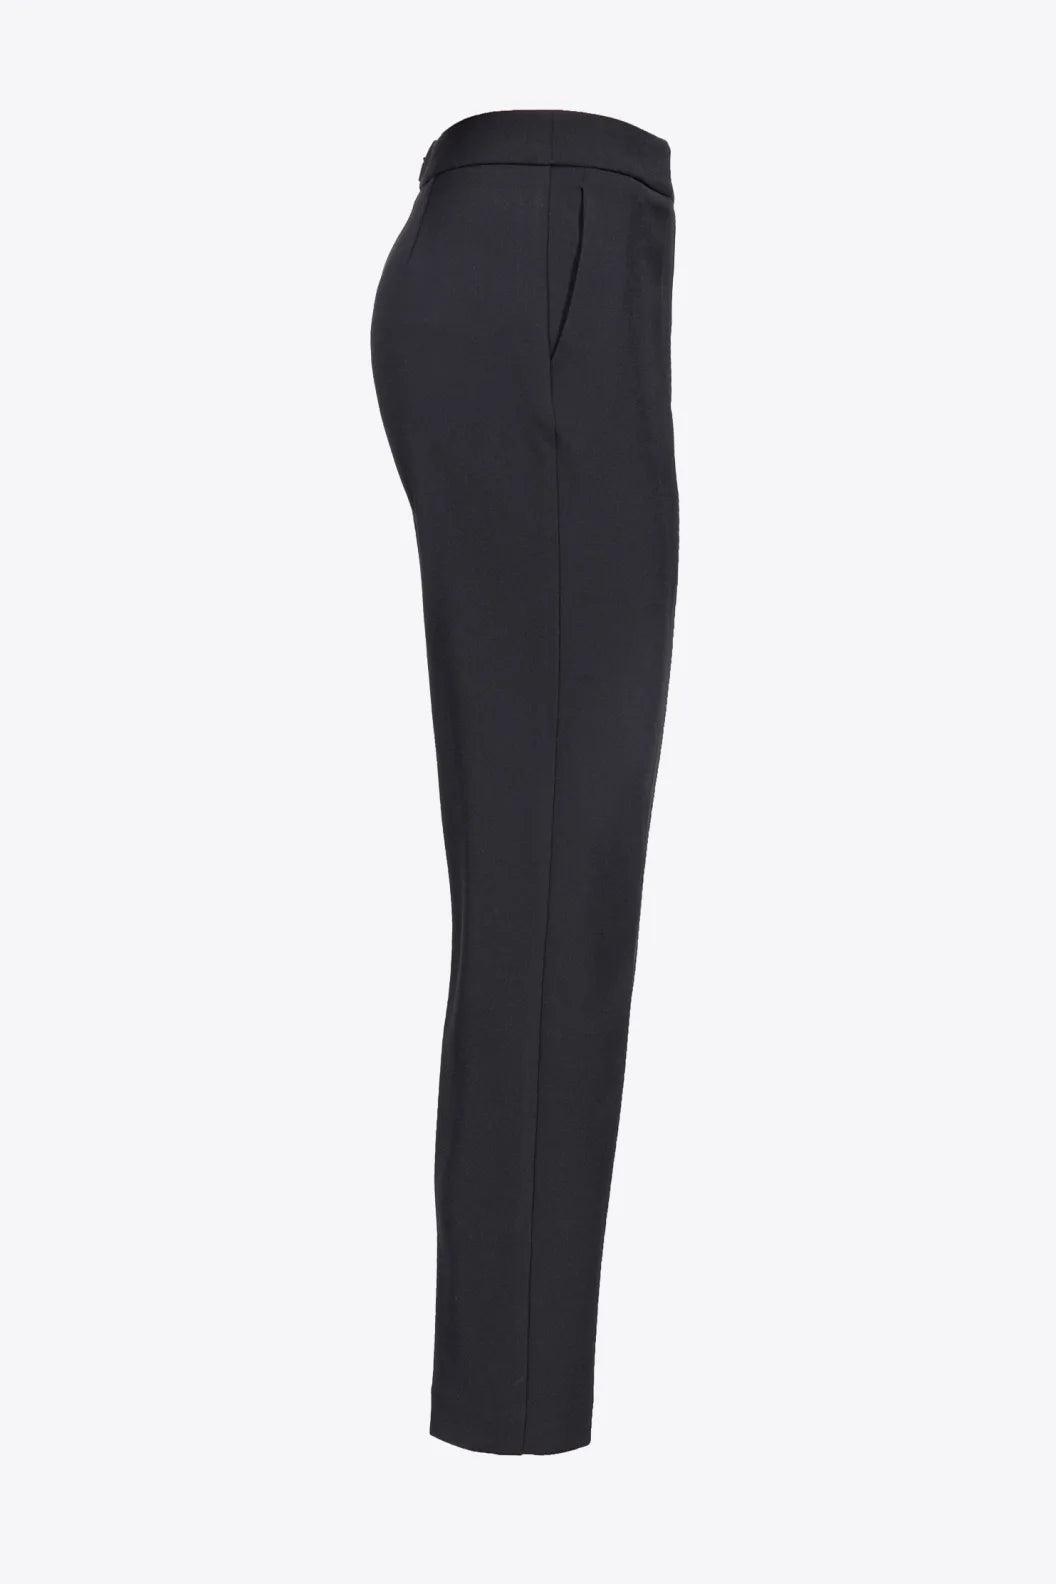 Pantalone Slim Pinko / Nero - Ideal Moda